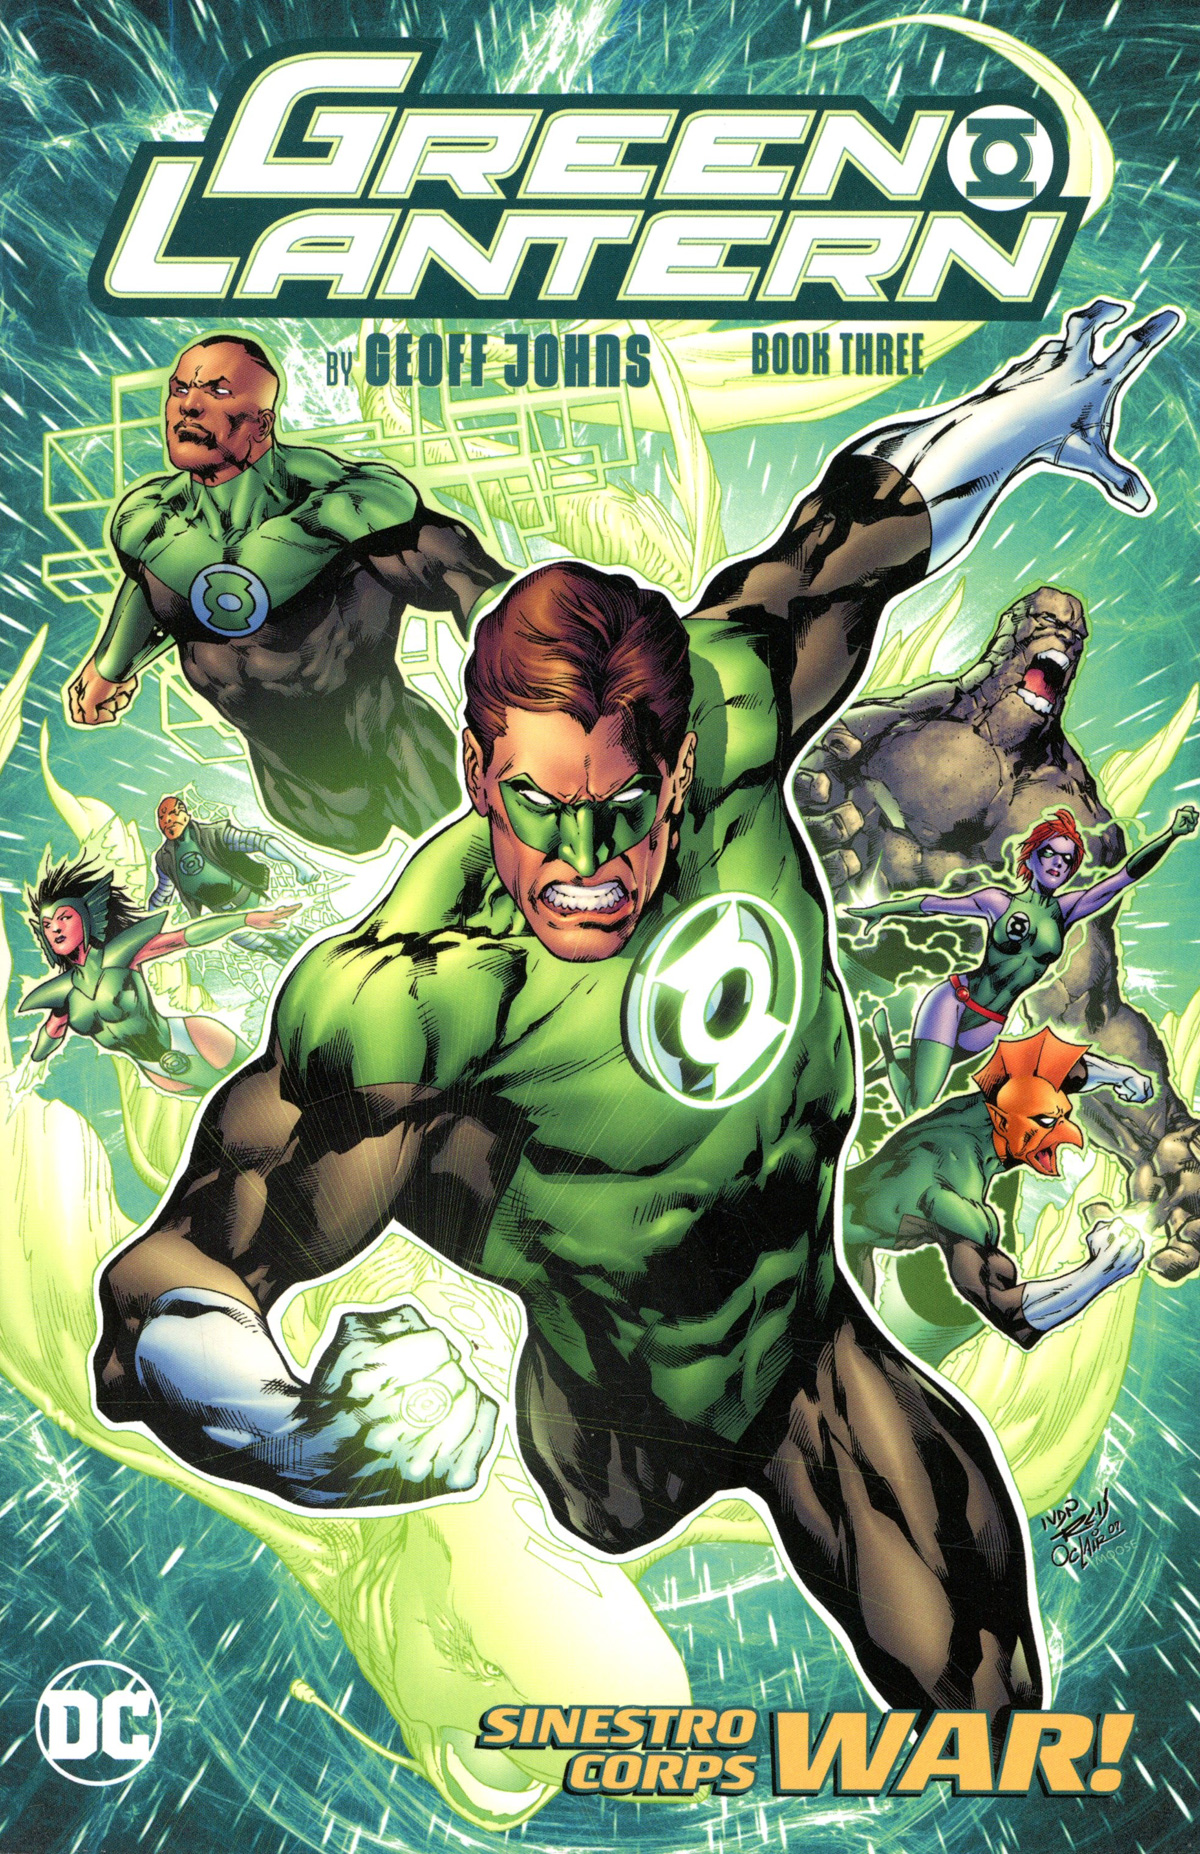 Green Lantern By Geoff Johns Book 3 TP